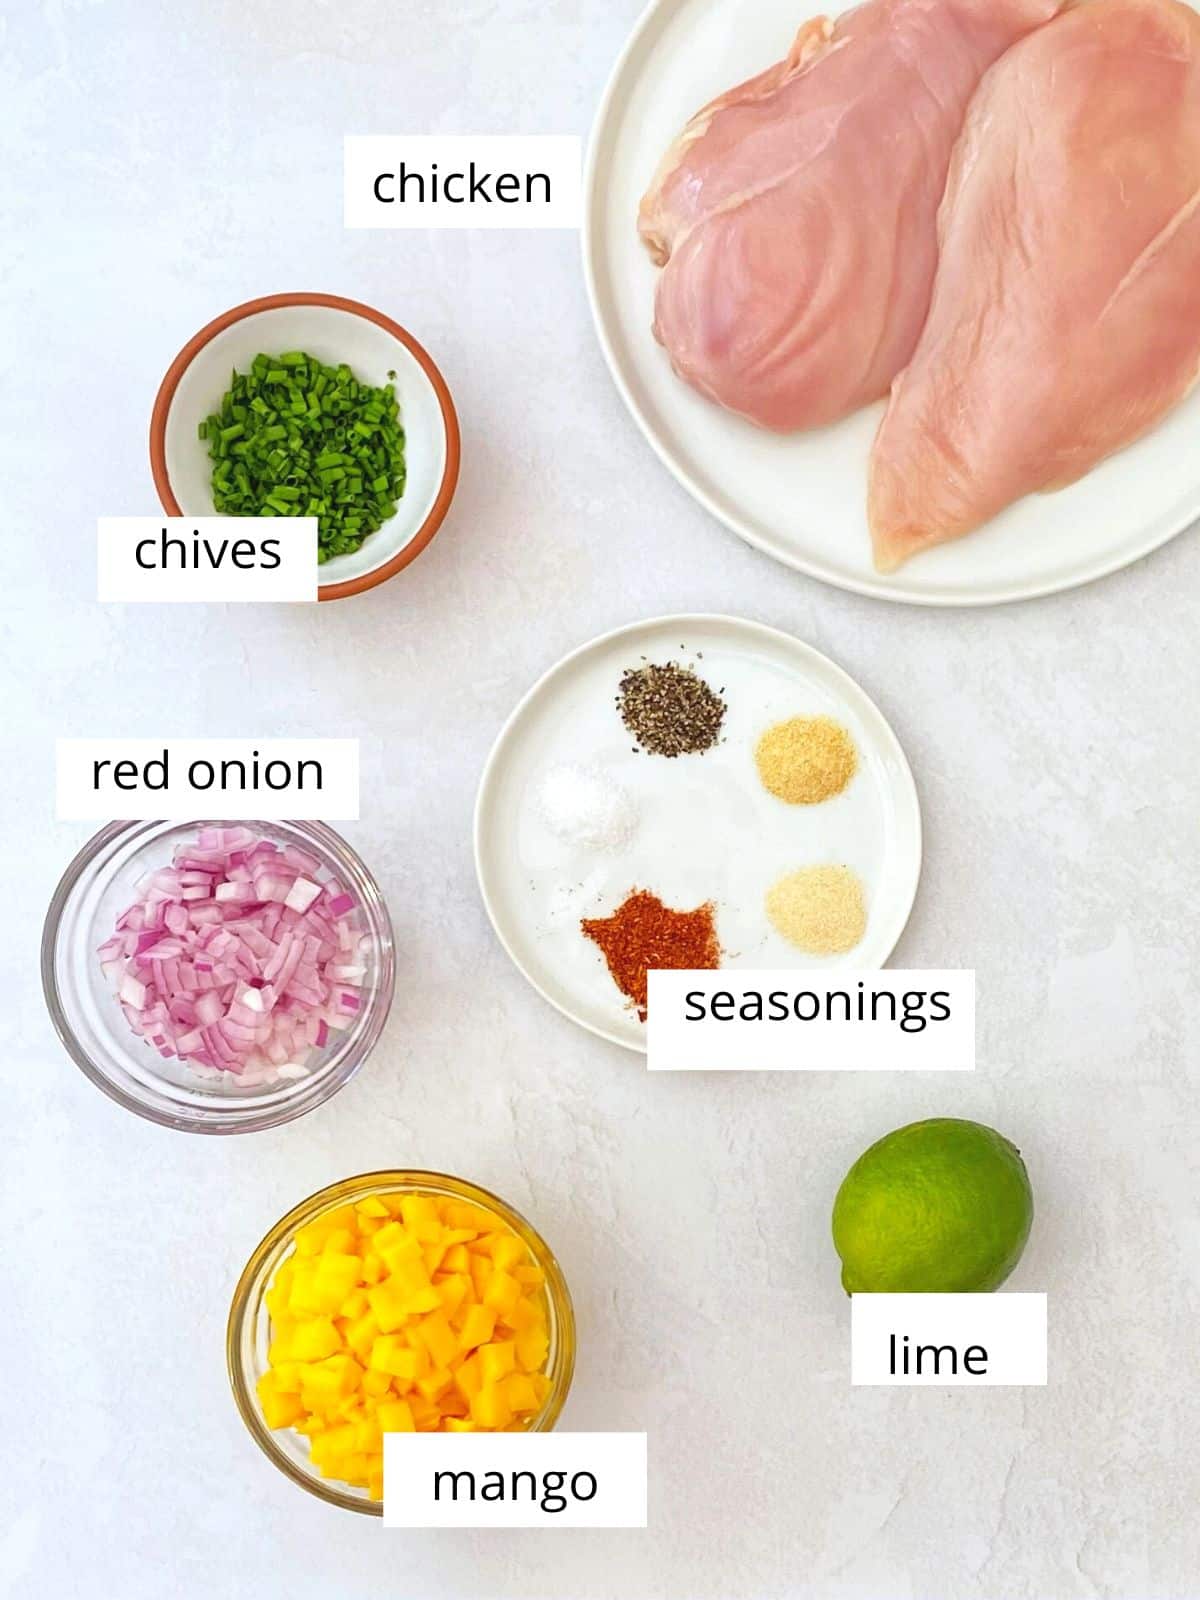 ingredients for chicken with mango salsa.